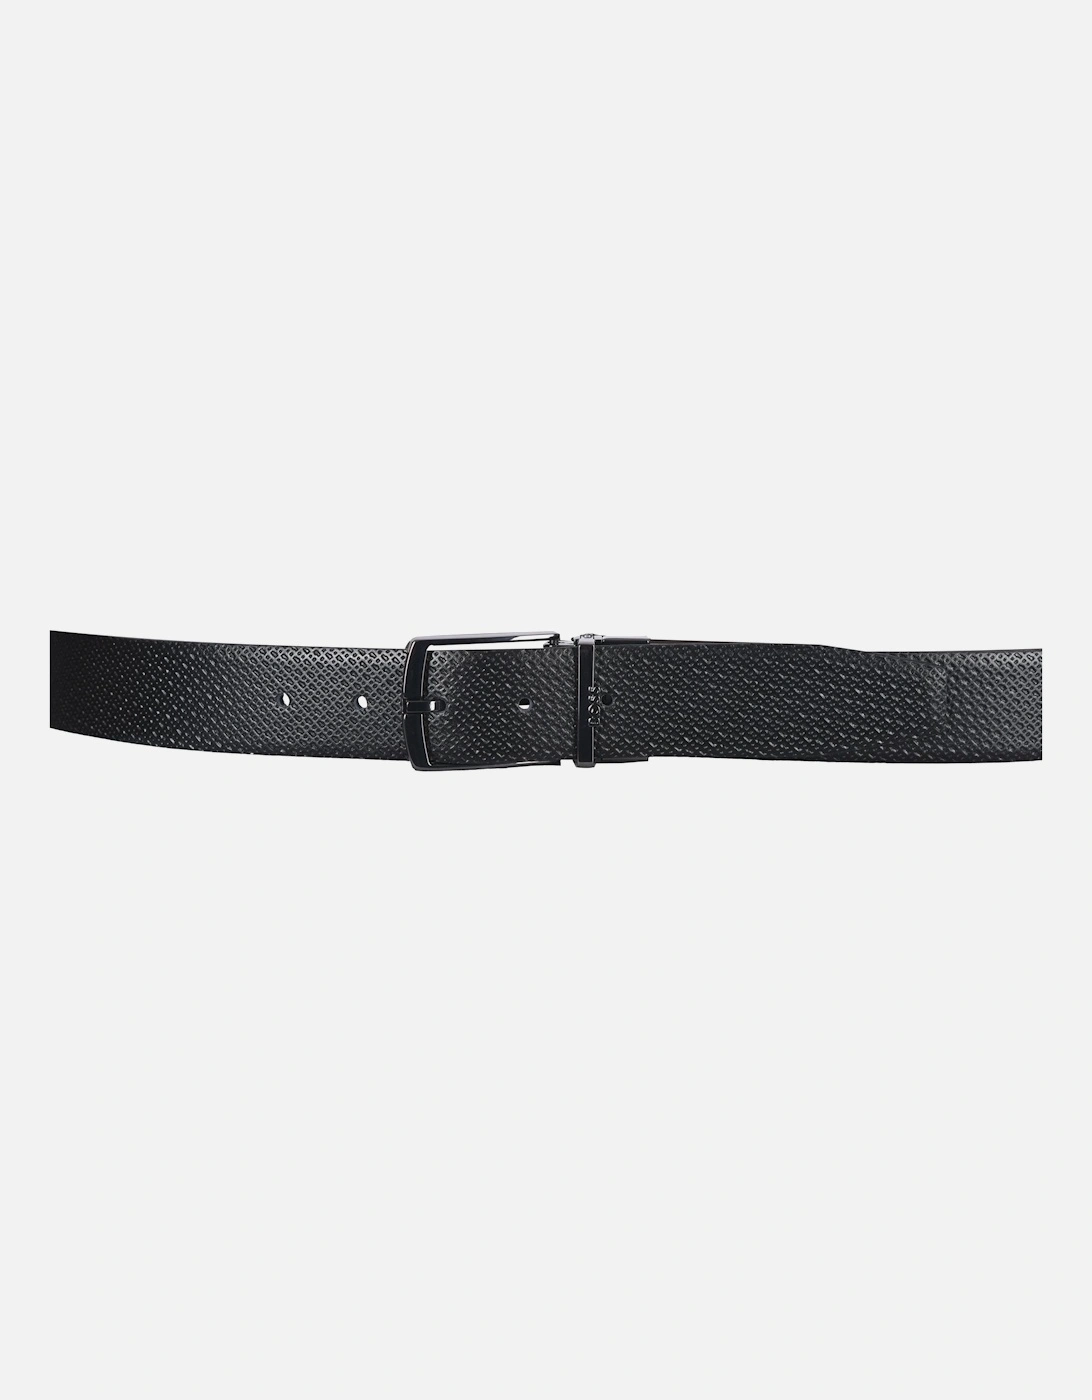 Finest Italian Leather Reversible Belt Gift Set, Black/Brown